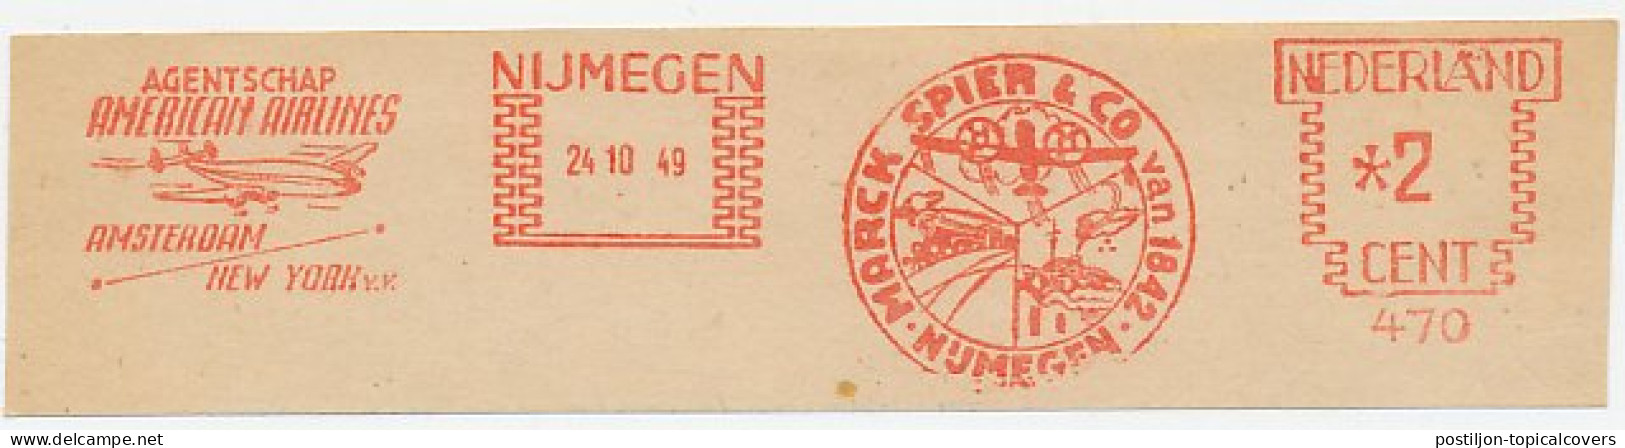 Meter Cut Netherlands 1949 Agency American Airlines - Amsterdam - New York - Airplane - Vliegtuigen